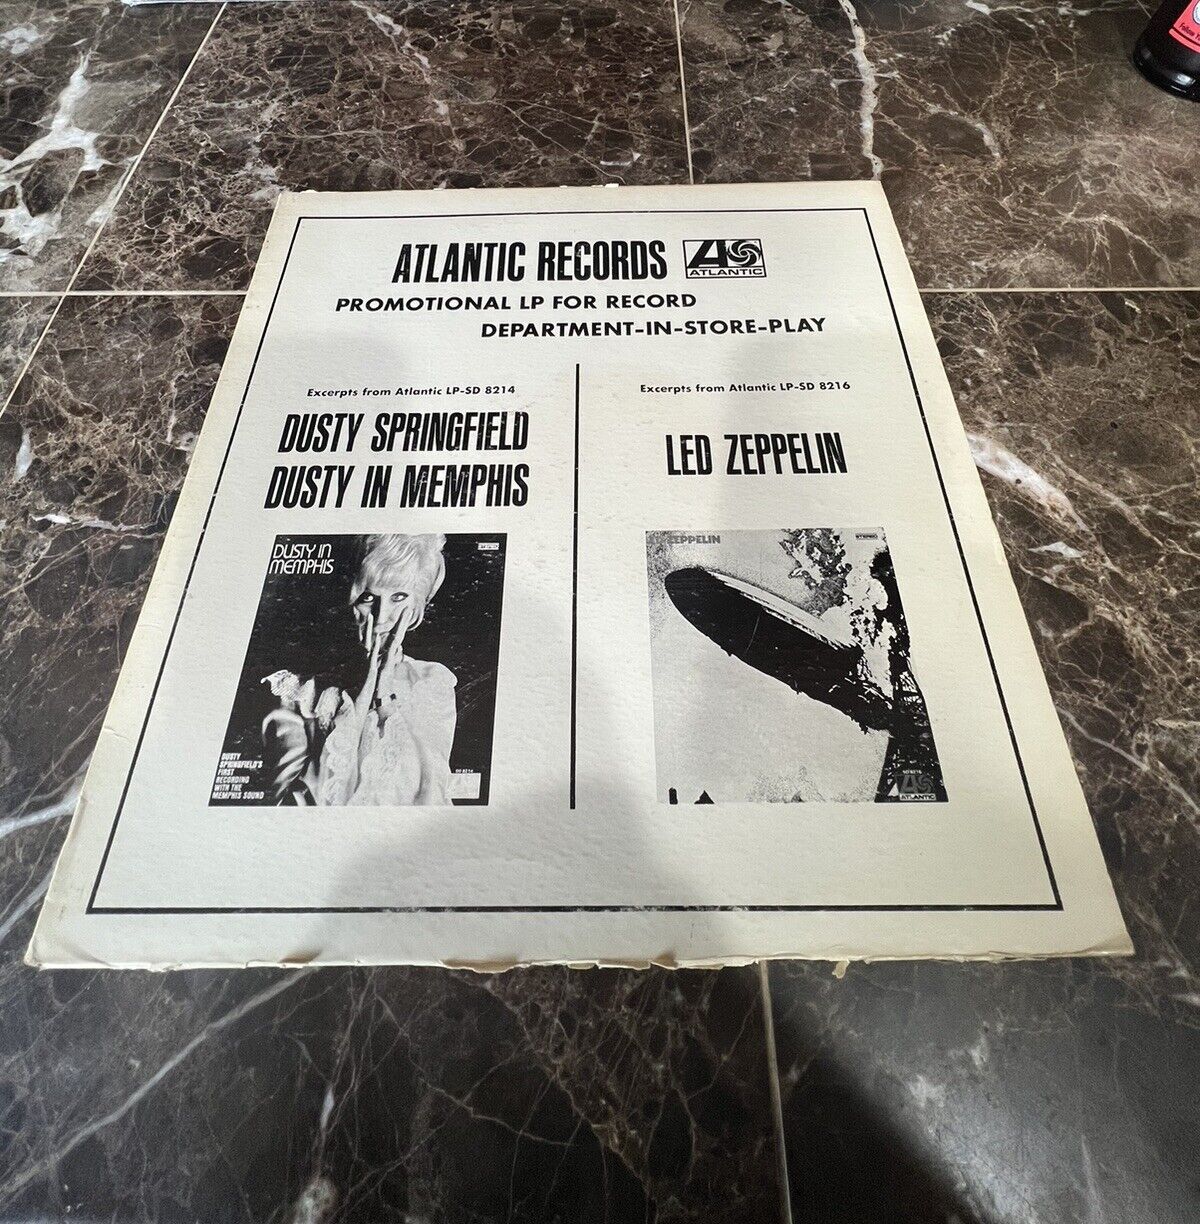 Led Zeppelin RARE vinyl white label PROMO extract from 1st album 1969 Atlantic